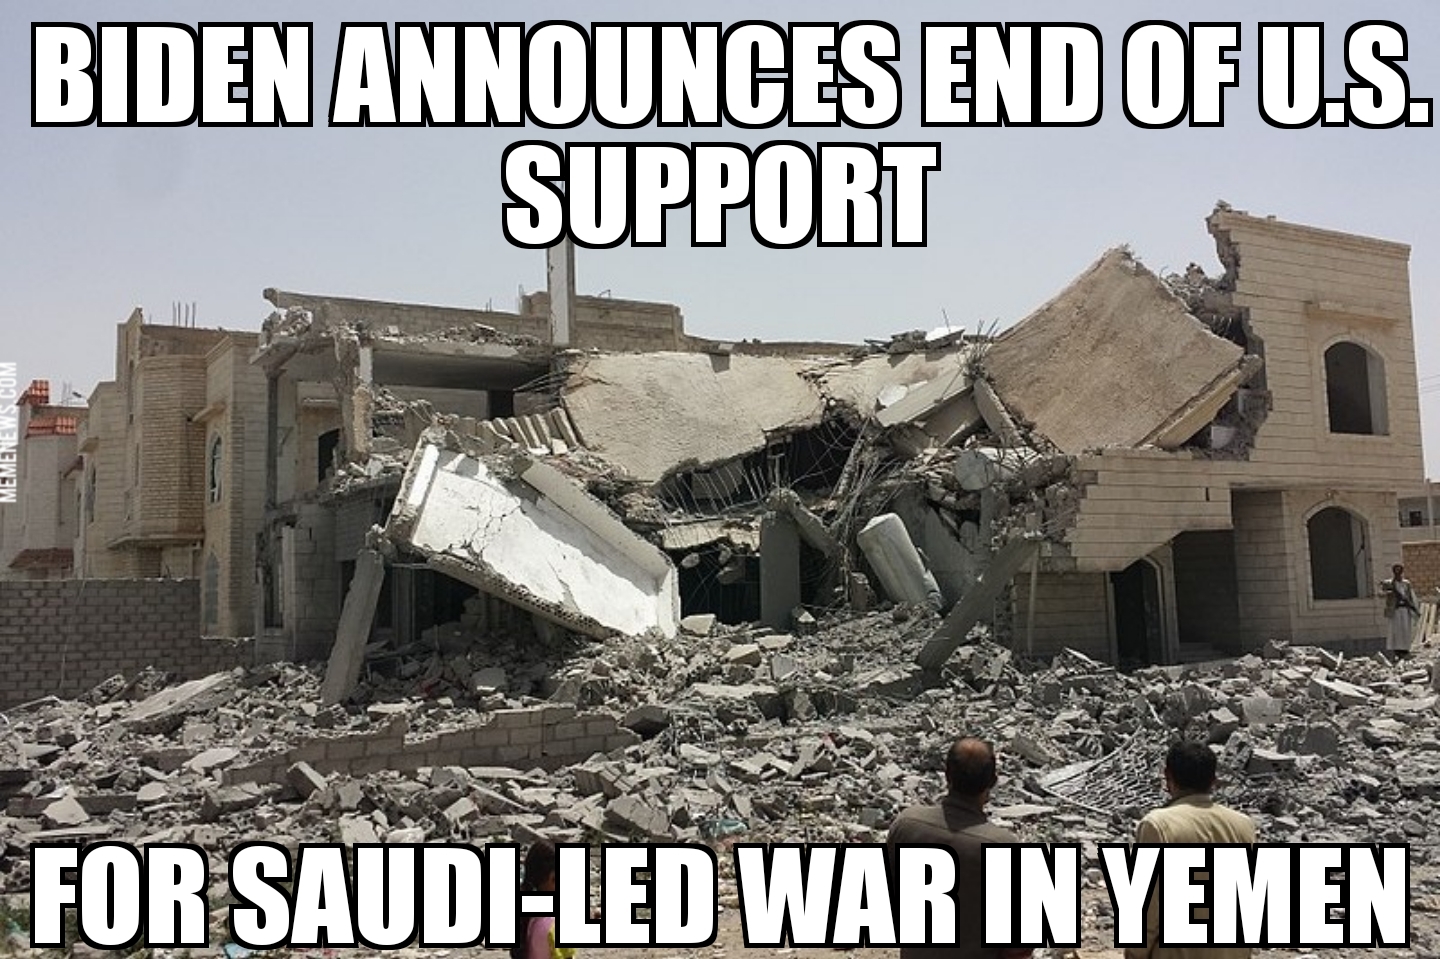 U.S. ends support for Yemen war